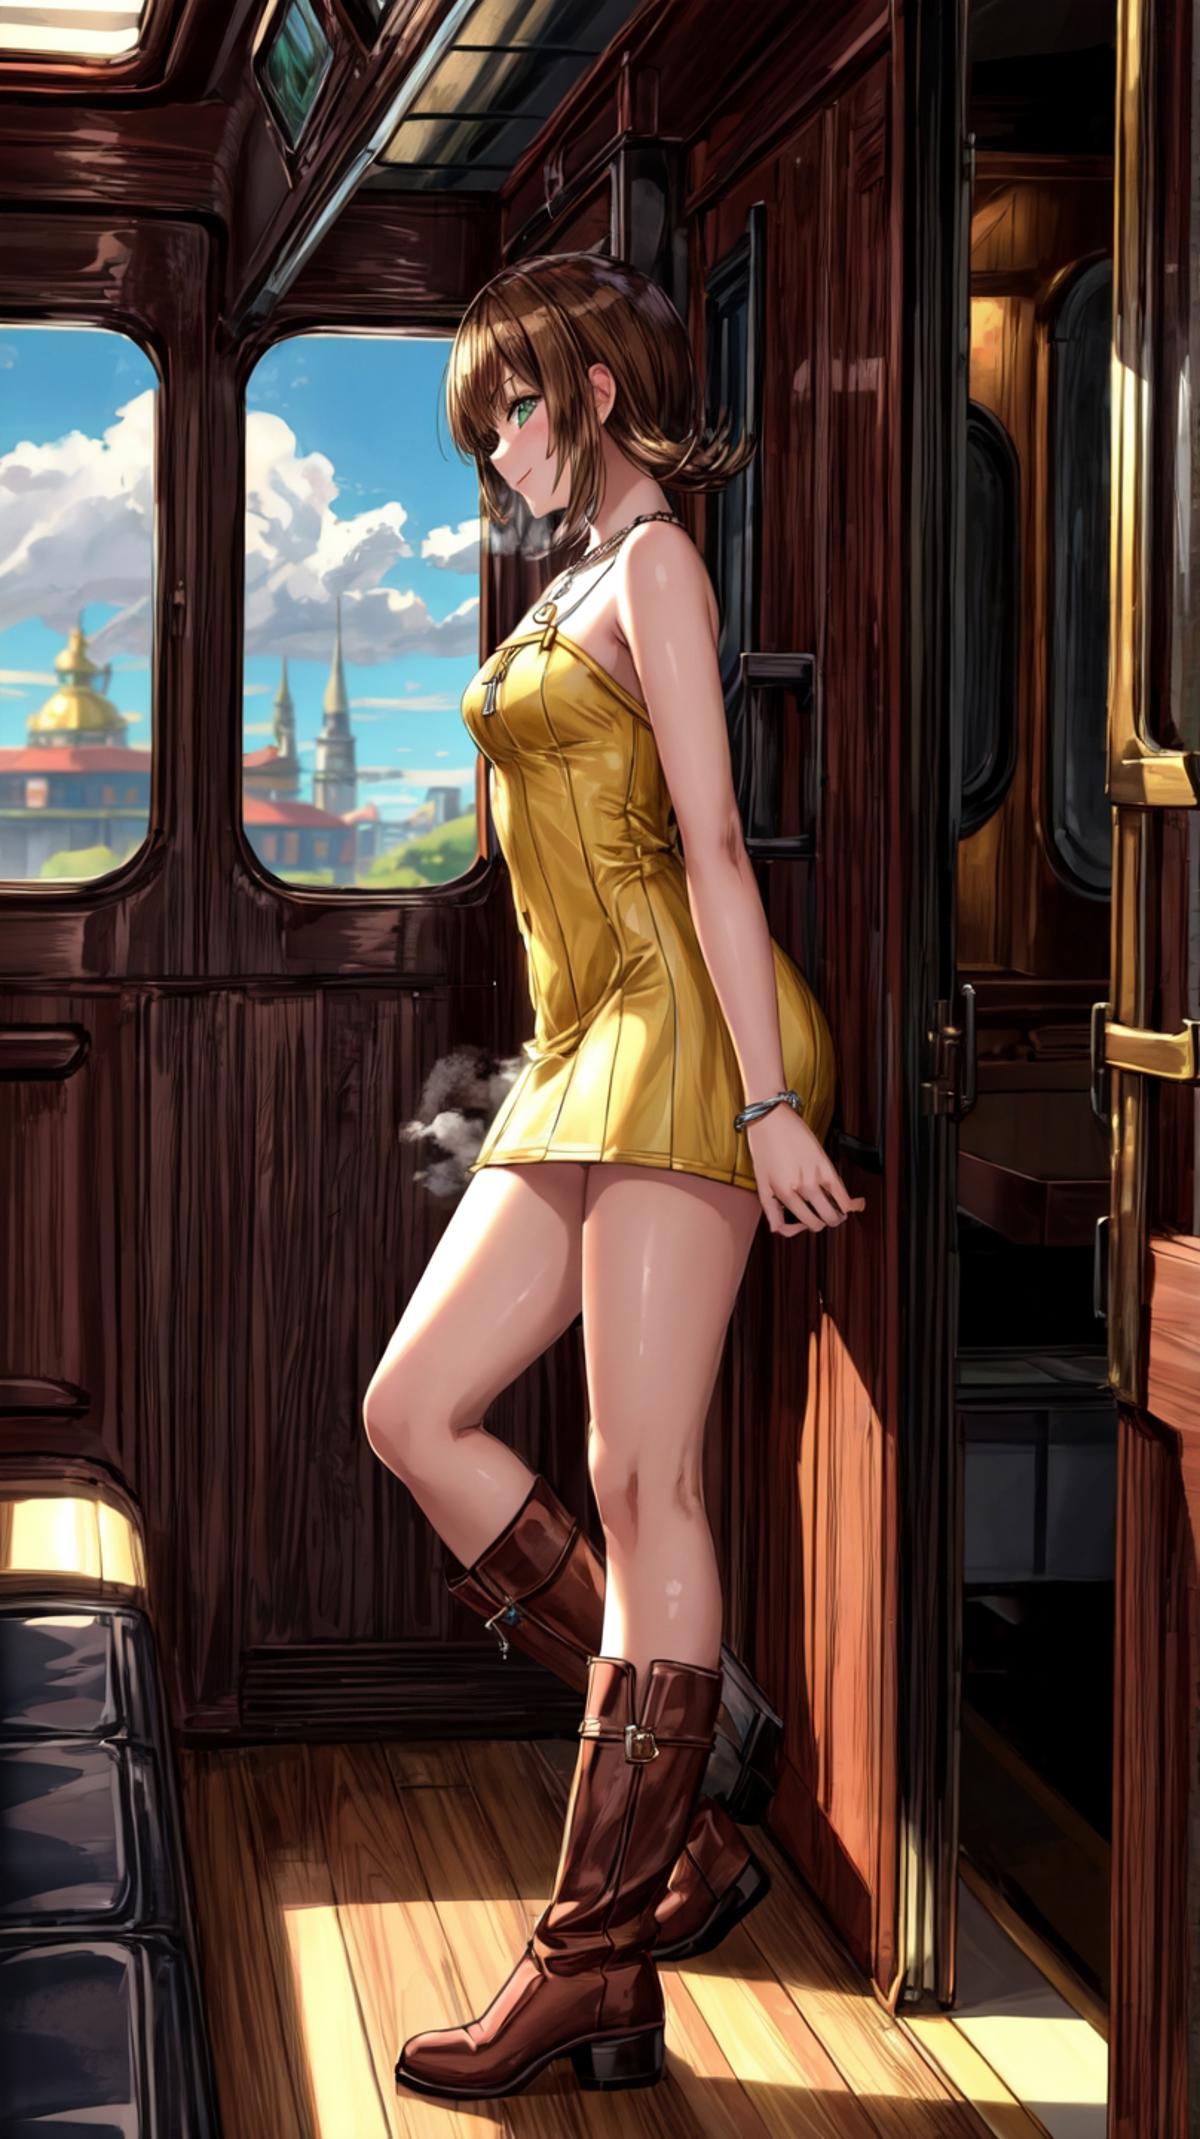 Selphie Tilmitt (Final Fantasy VIII) LoRA image by marusame